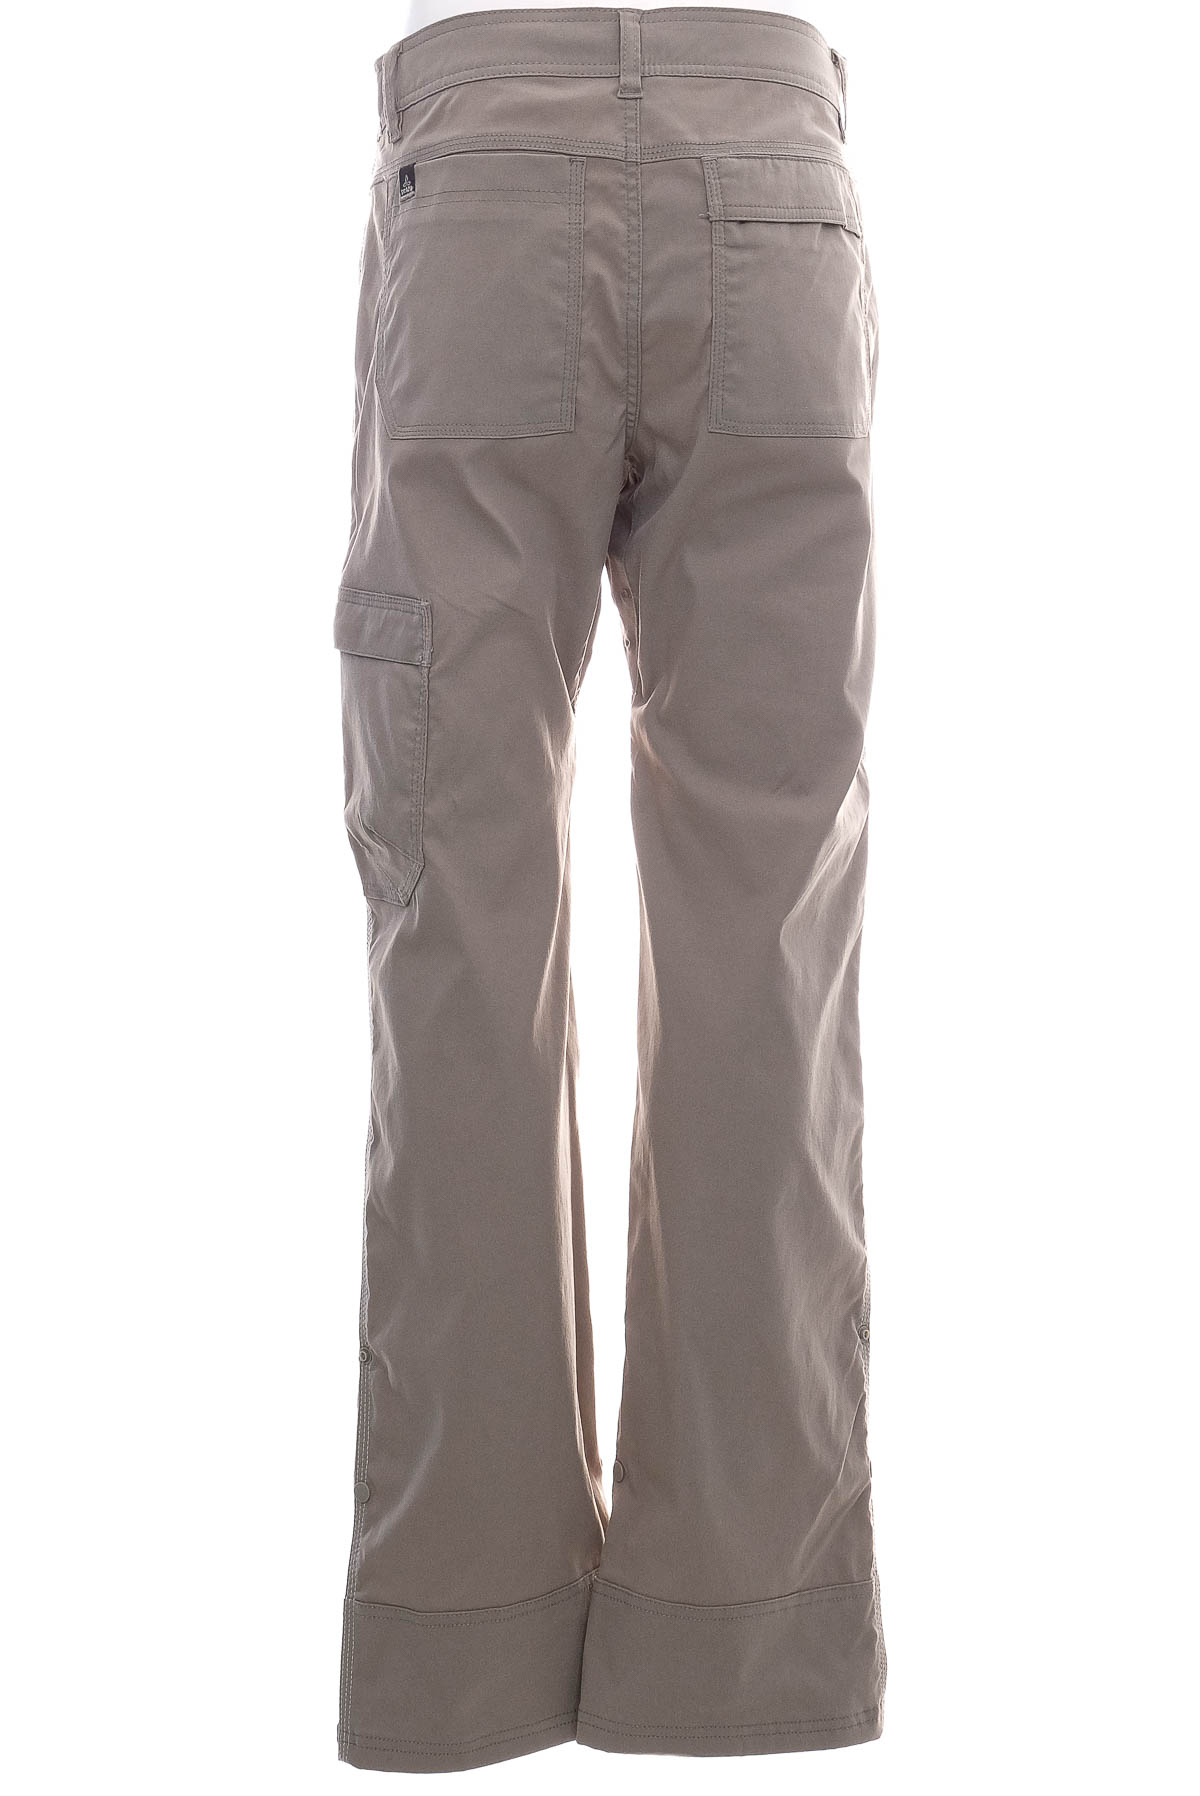 Men's trousers - Prana - 1